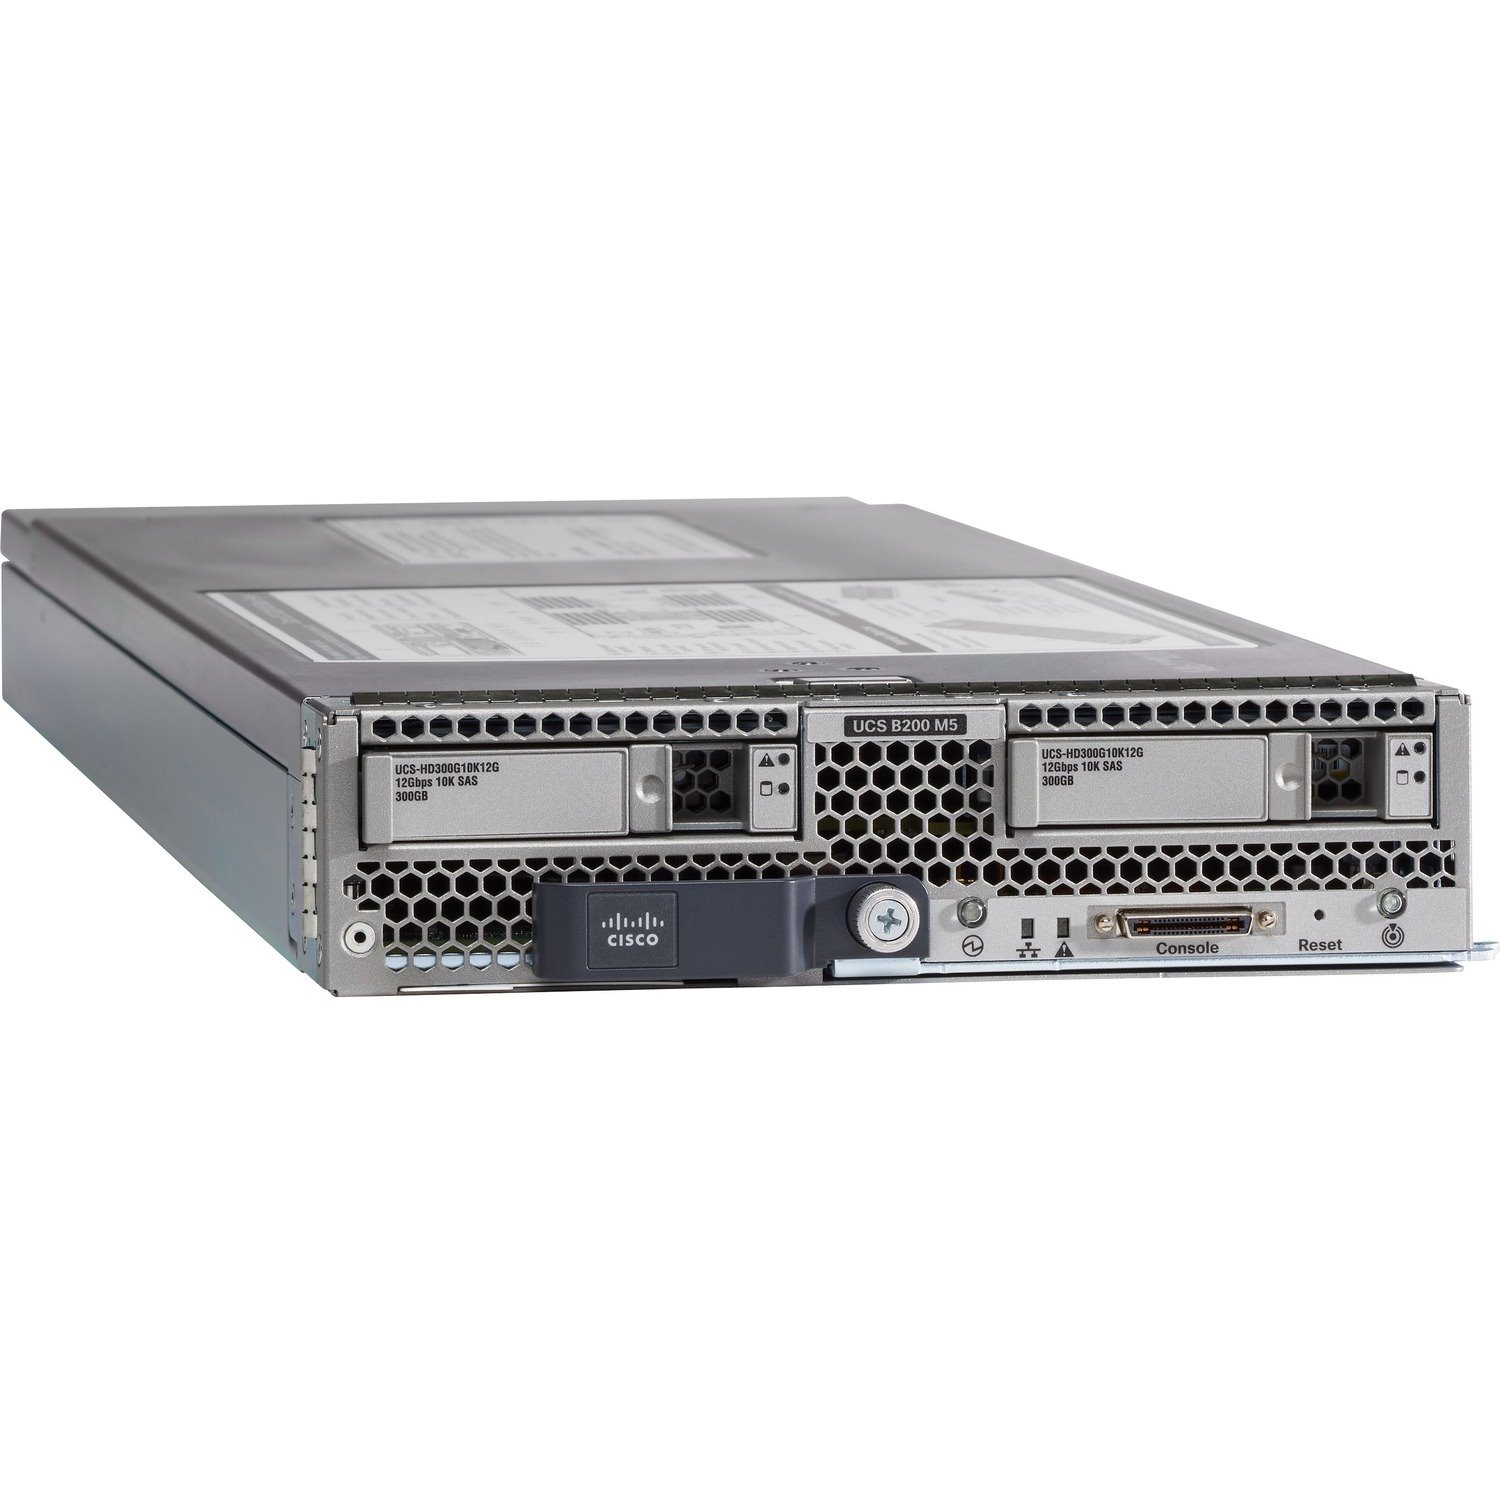 Cisco B200 M5 Blade Server - 2 x Intel Xeon Gold 5122 3.60 GHz - 384 GB RAM - Serial ATA, 12Gb/s SAS Controller